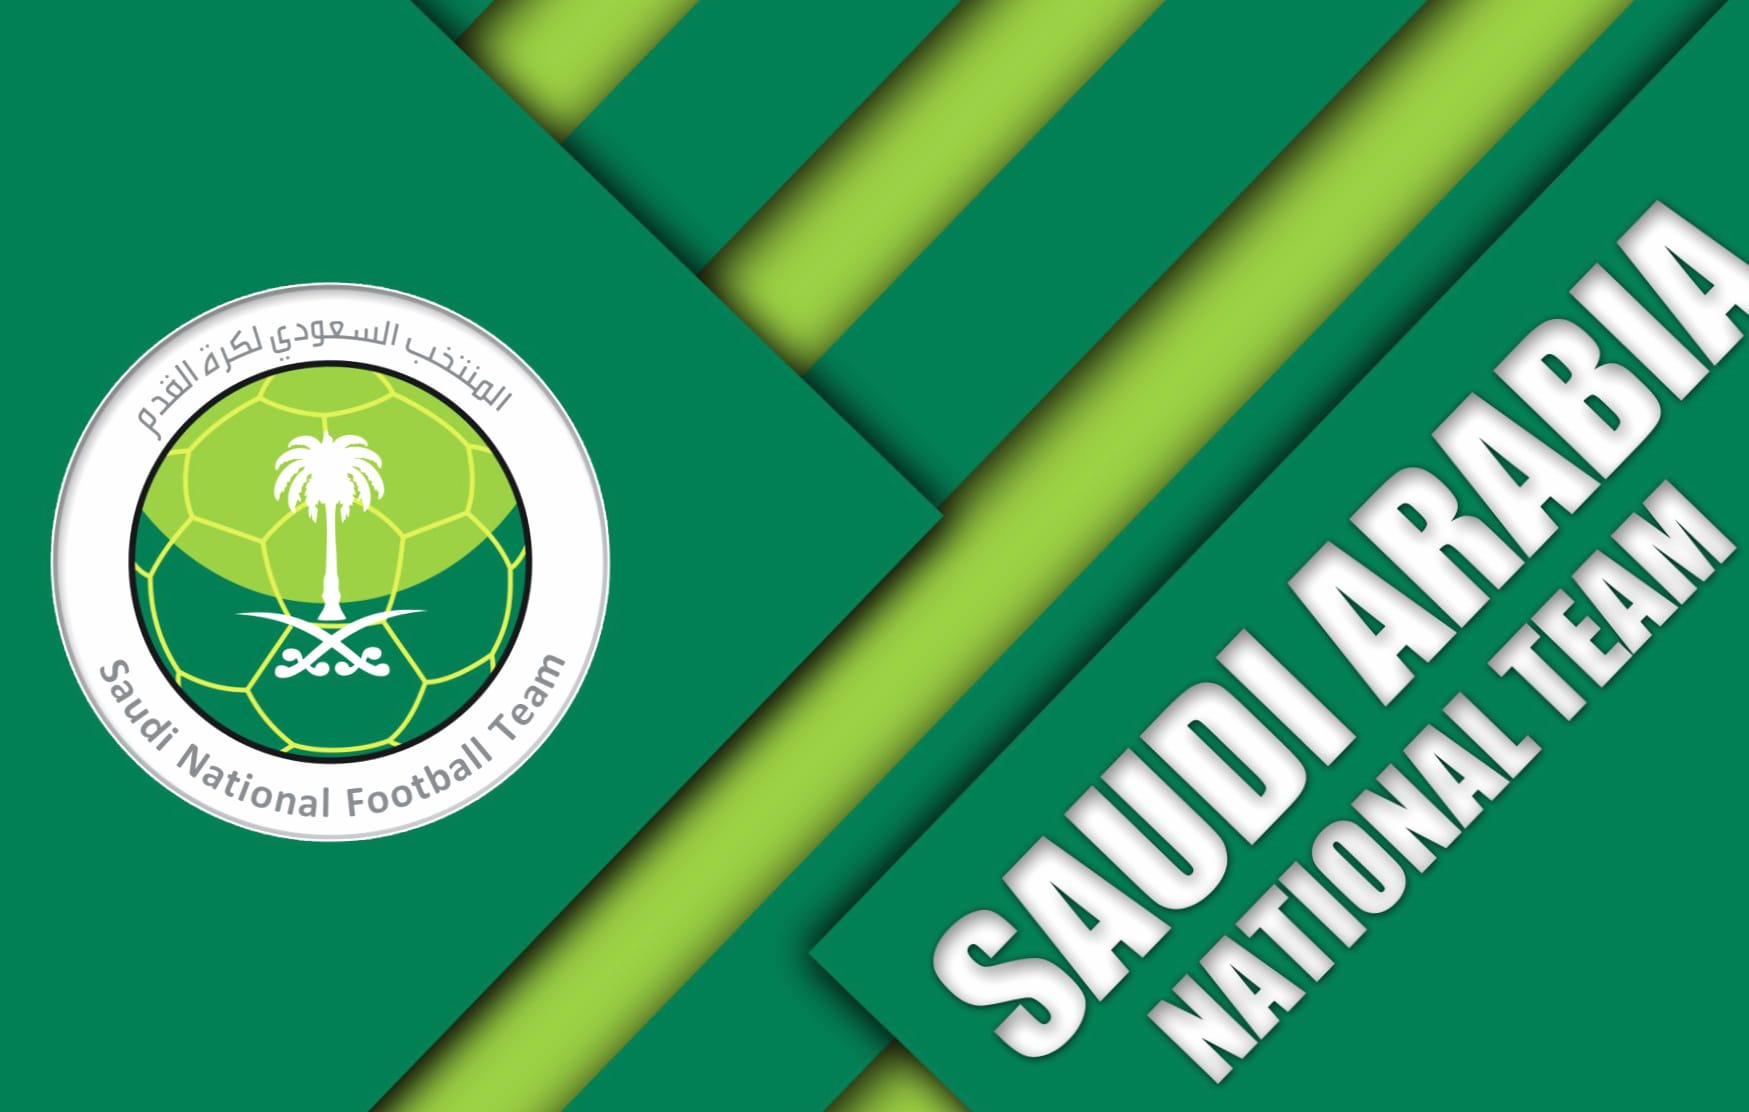 Saudi Arabia National Football Team at 1600 x 1200 size wallpapers HD quality